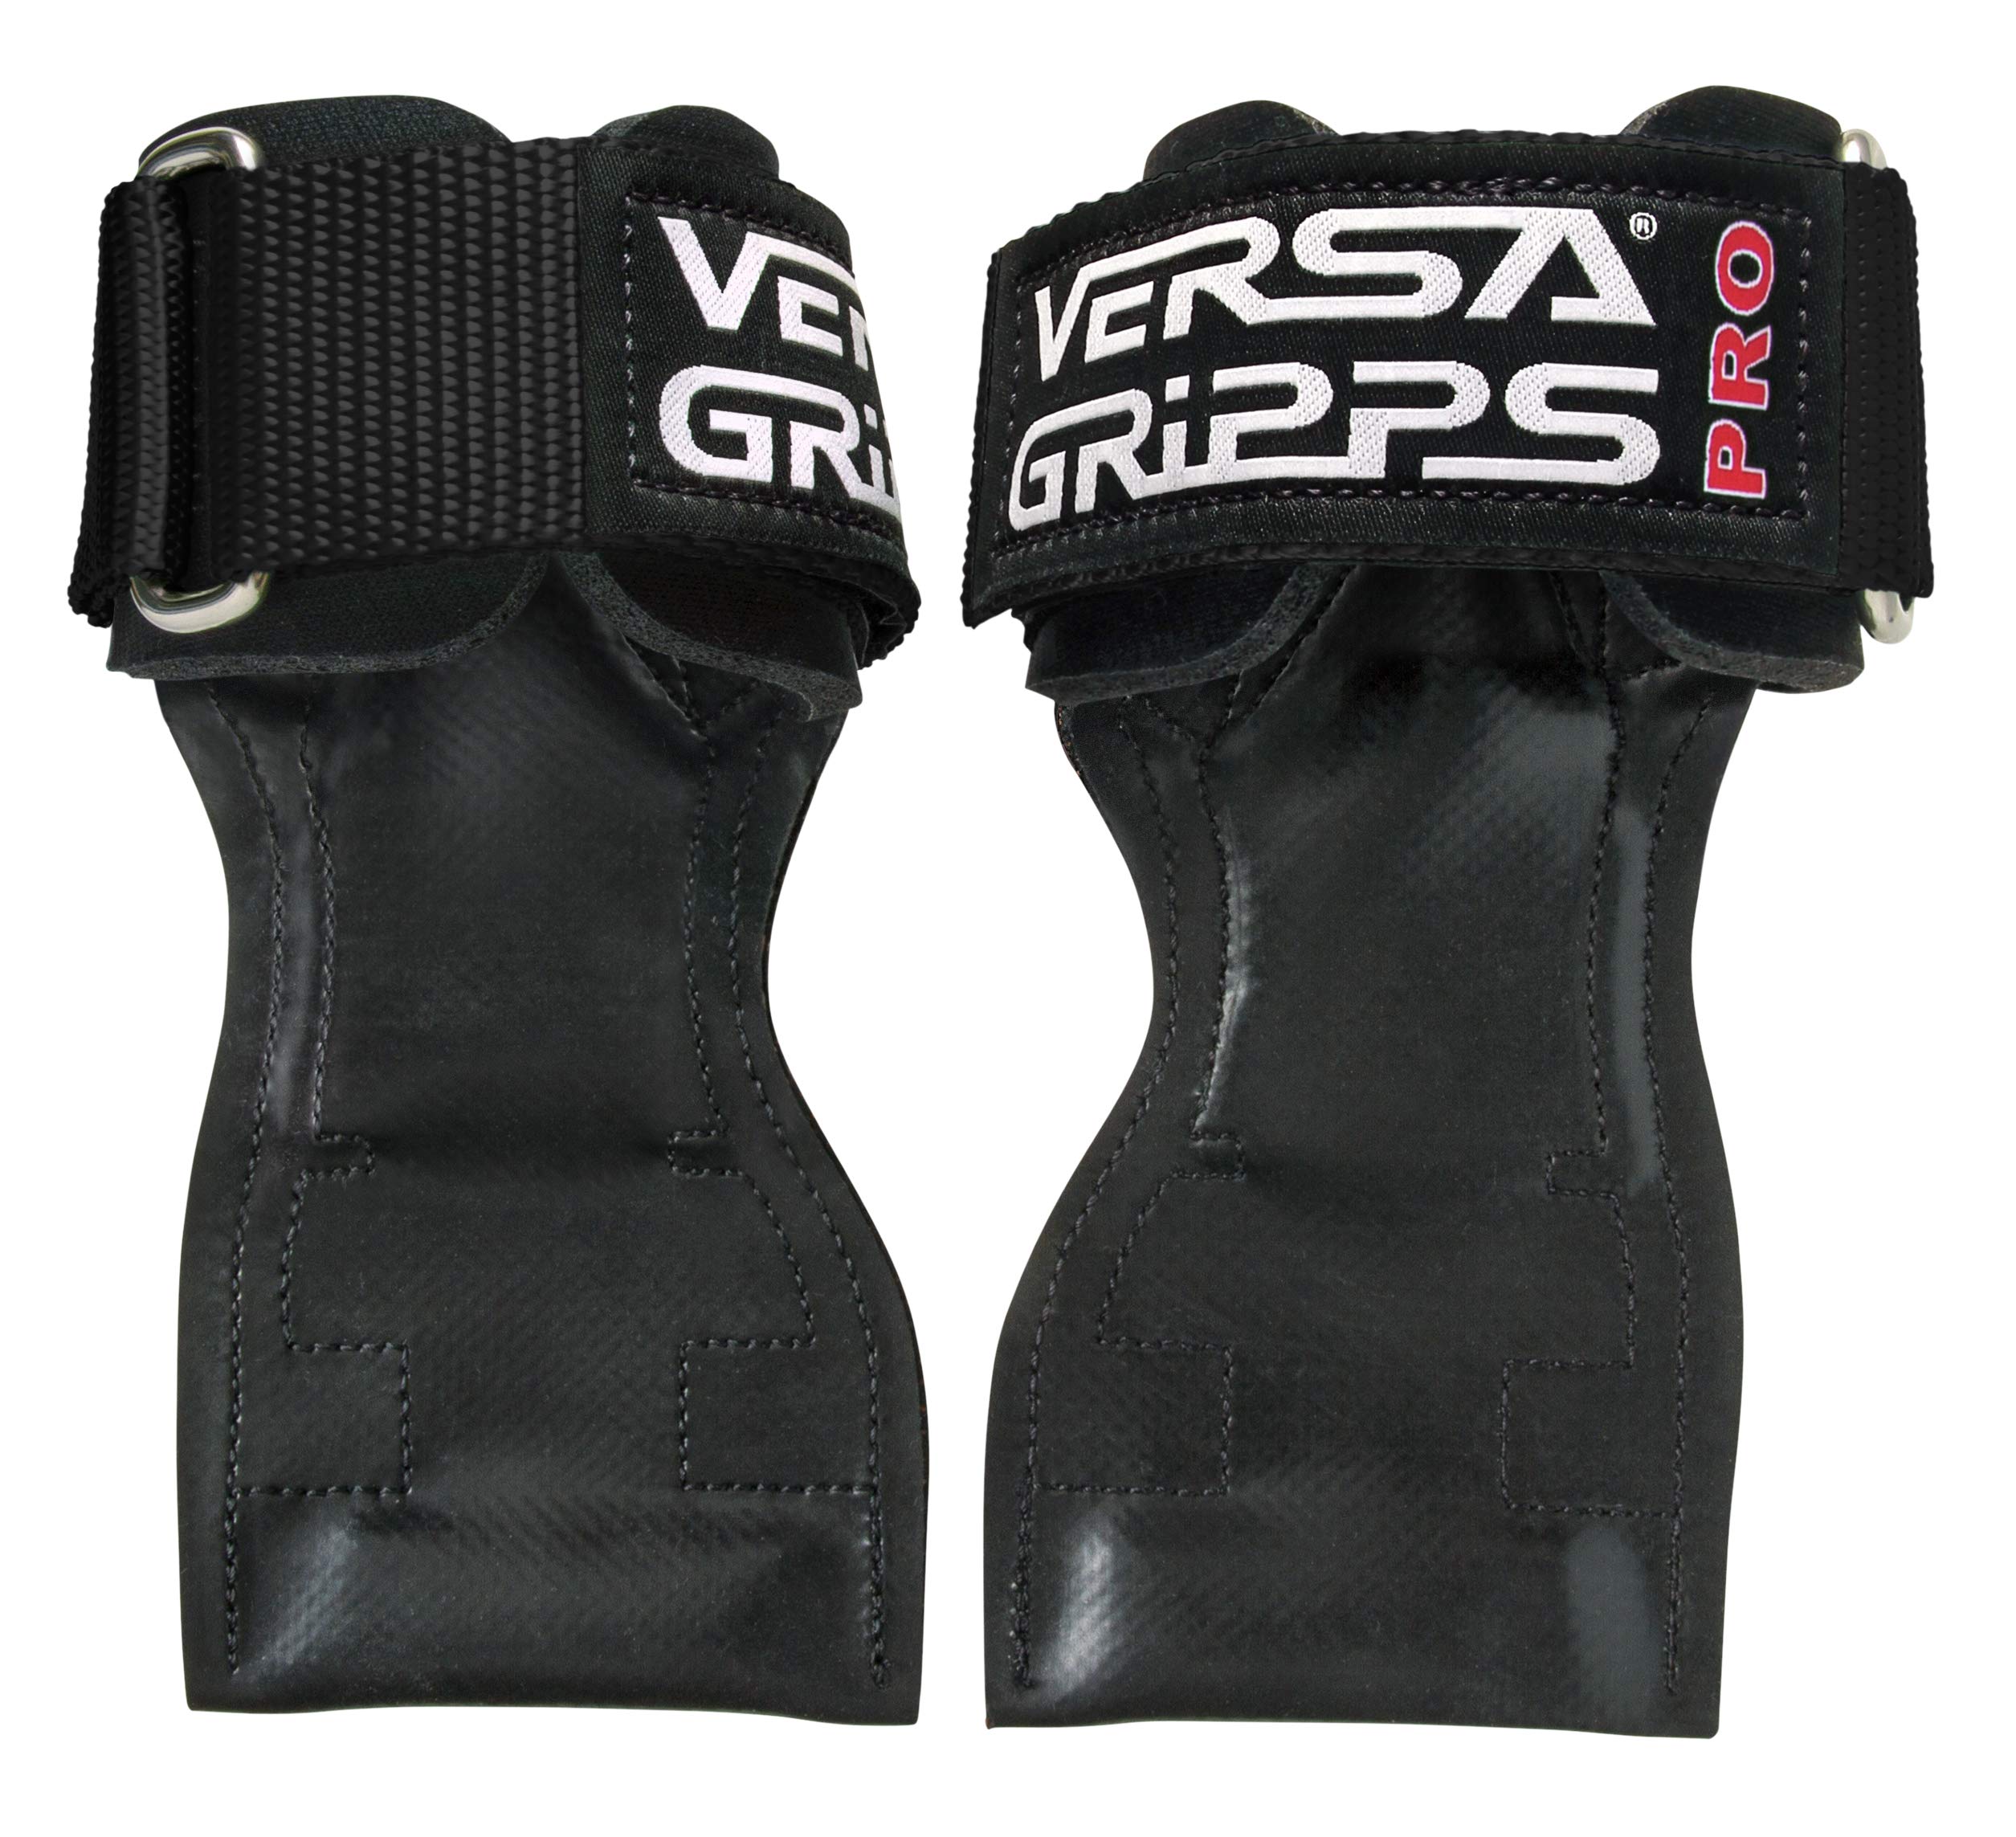  Versa Gripps प्रो प्रामाणिक. विश्व में सर्वश्रेष्ठ प्रशिक्षण सहायक उपकरण। संयुक्त...